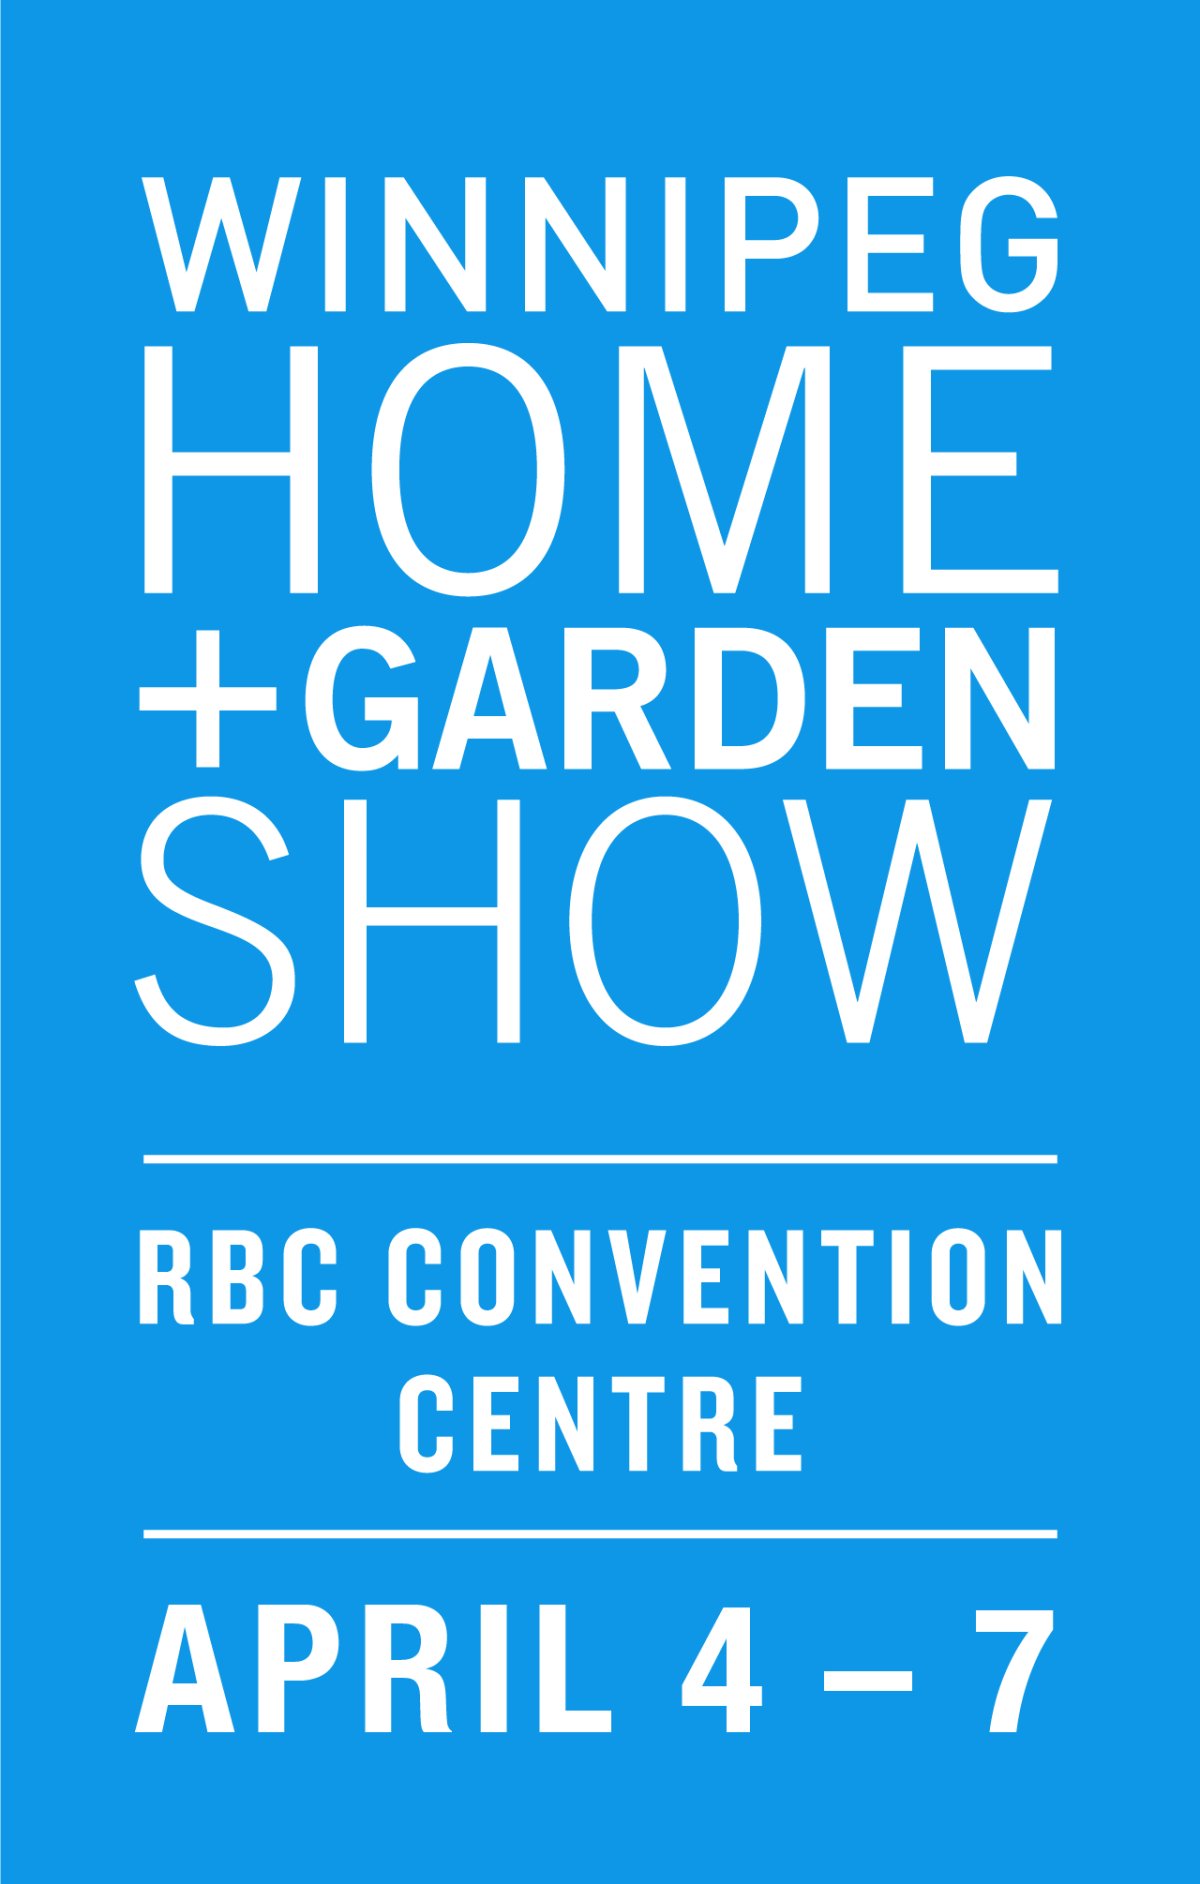 Winnipeg Home + Garden Show - image